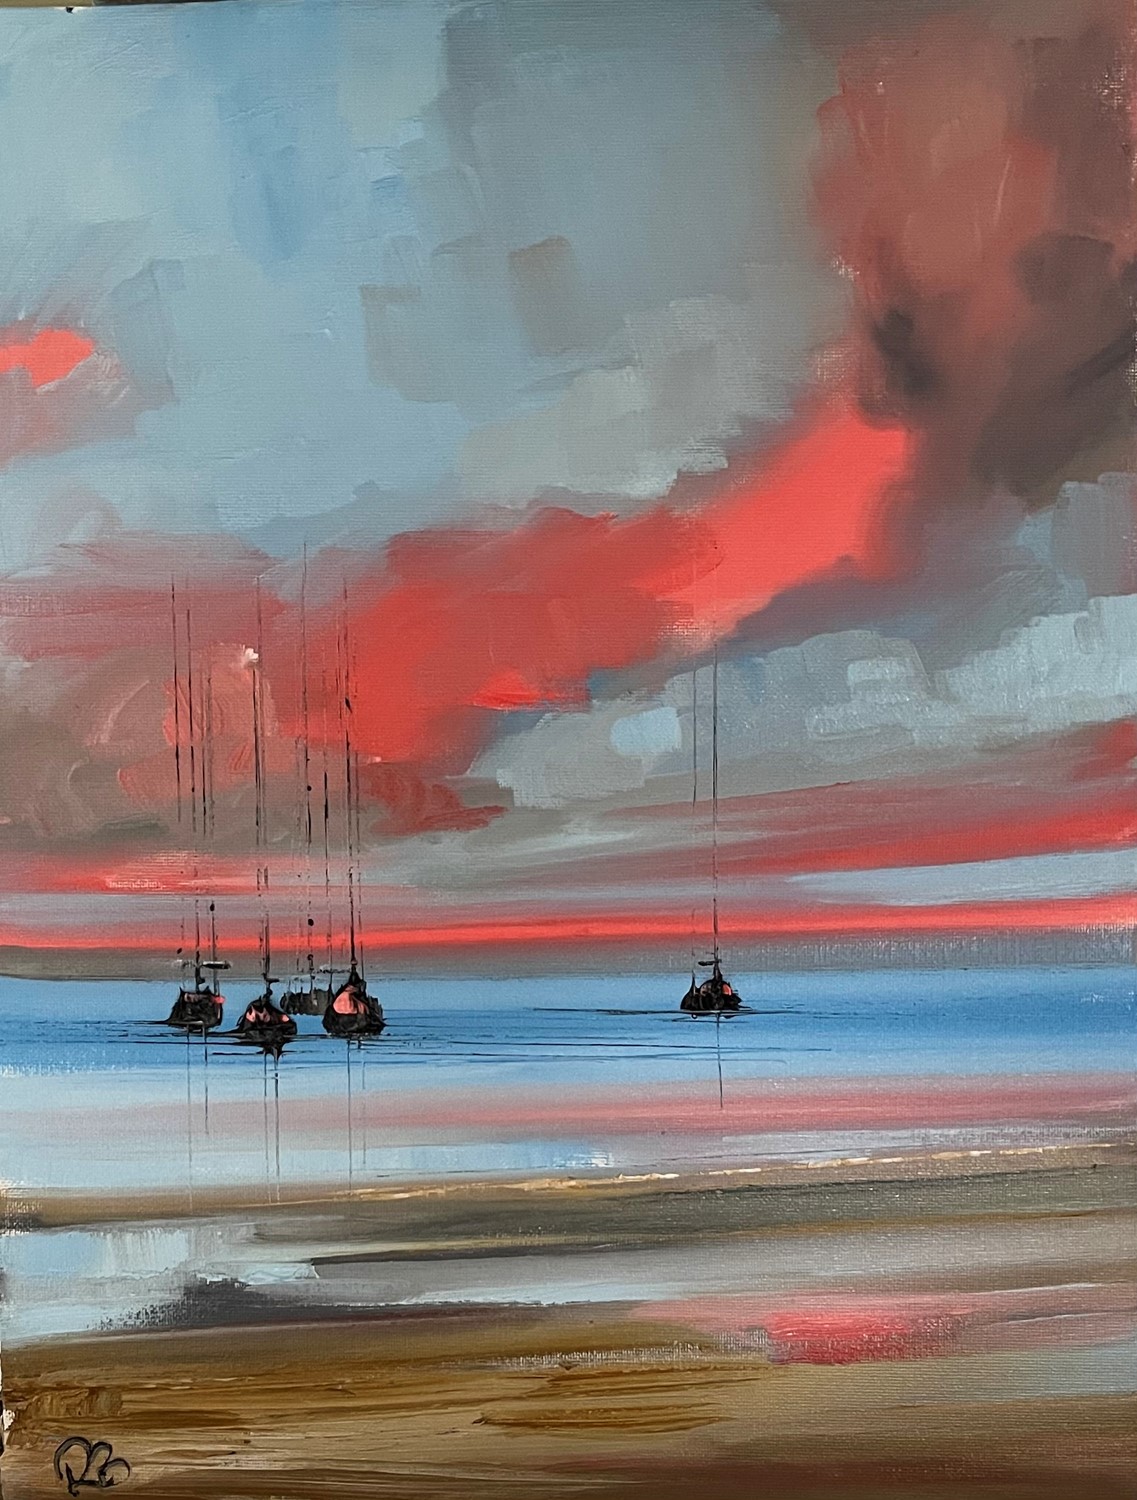 'Pink sky, blue shore' by artist Rosanne Barr